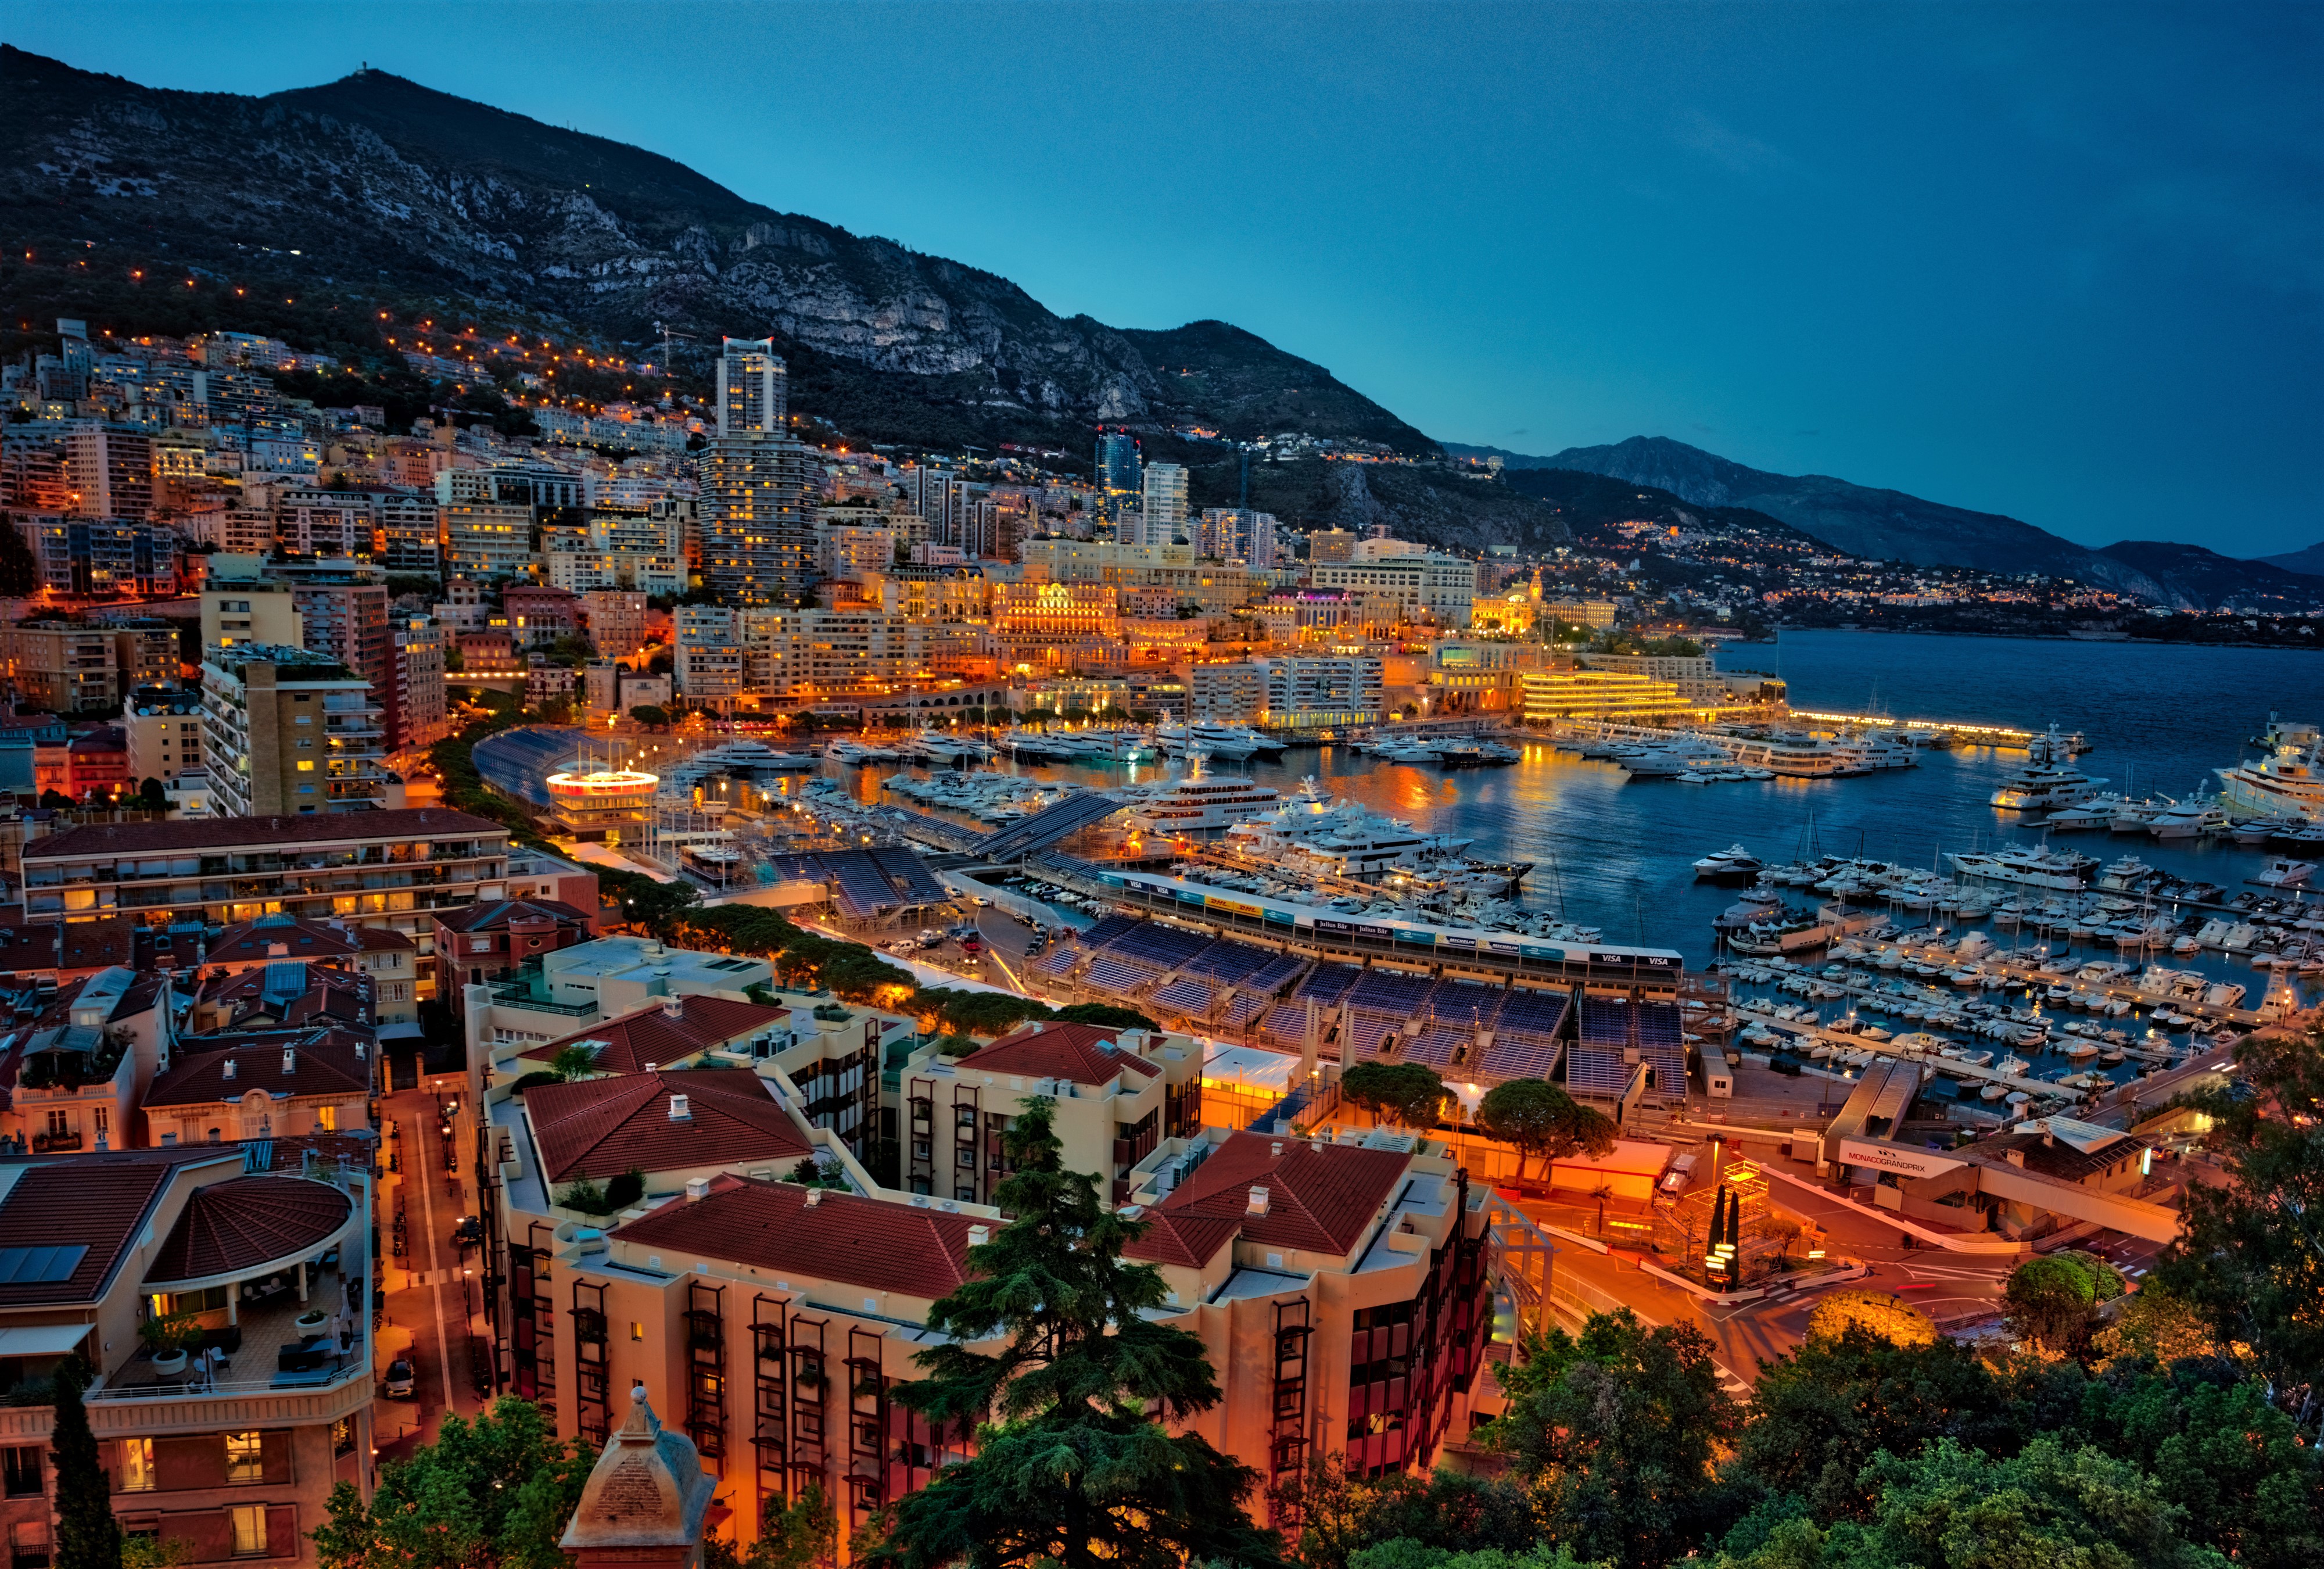 Monte Carlo At Night 4k Ultra HD Wallpaper Background Image